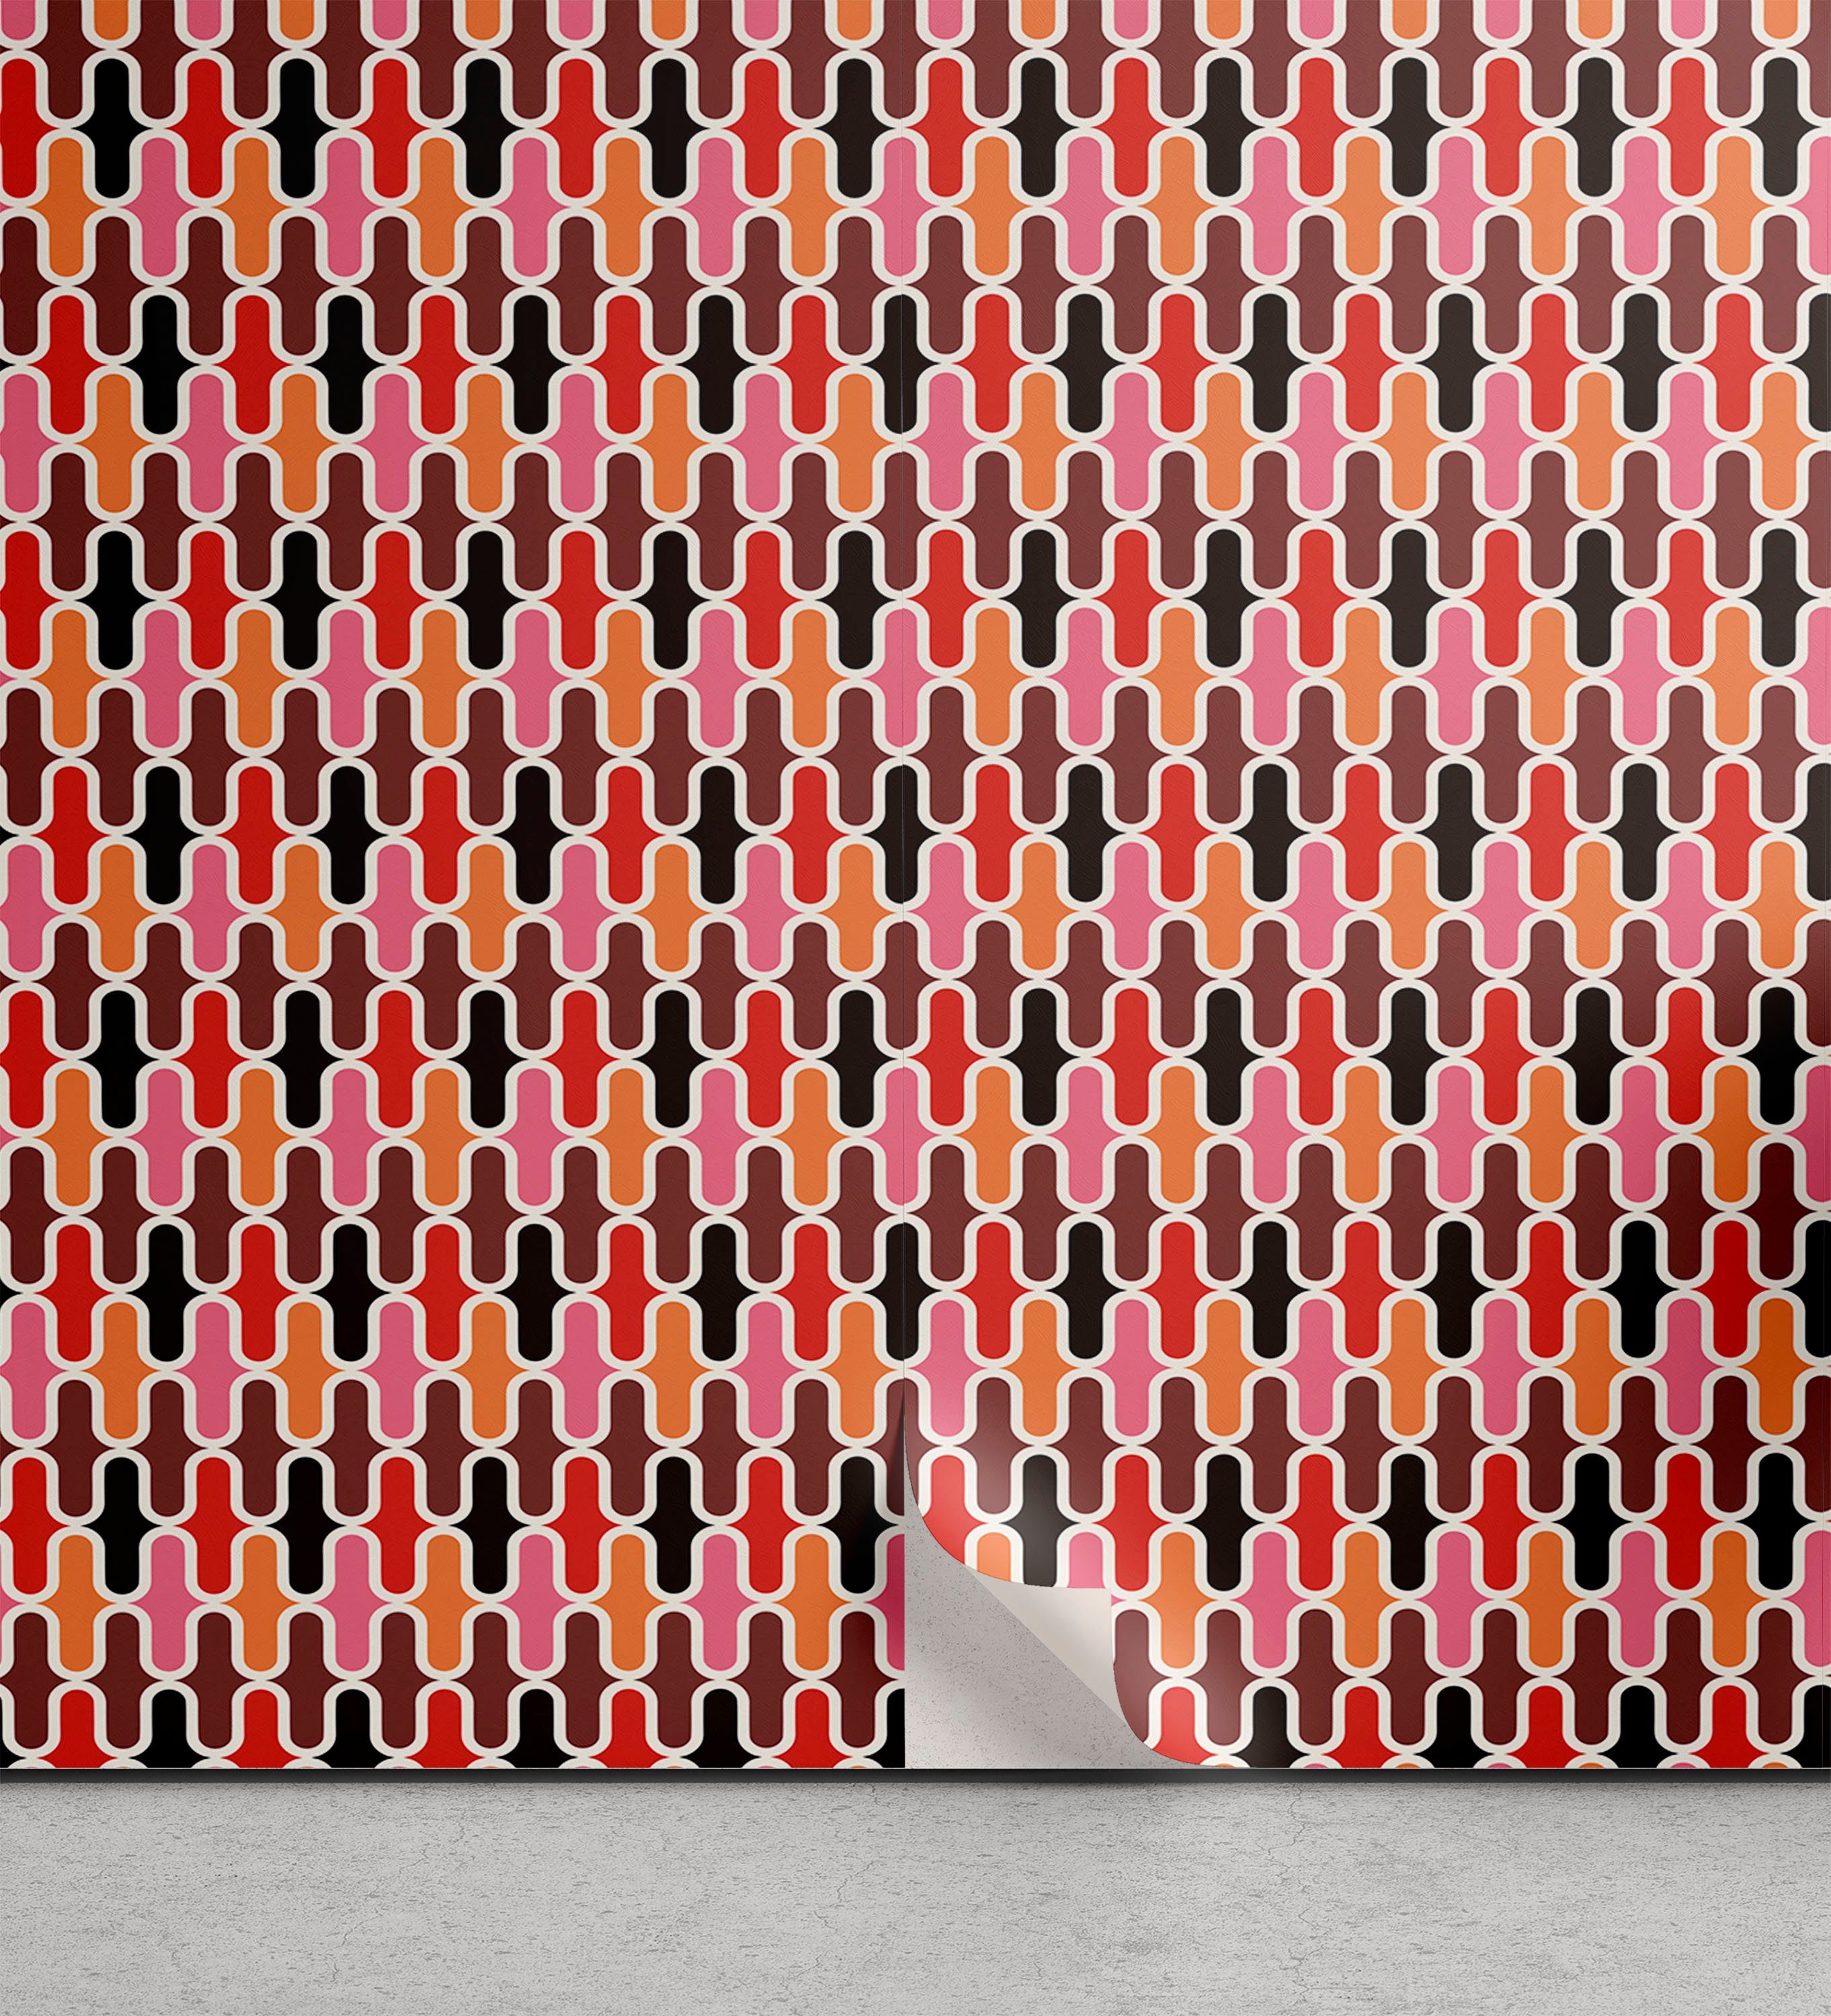 Abakuhaus Vinyltapete selbstklebendes Wohnzimmer Küchenakzent, Abstrakt Vertikale Linien Grafik